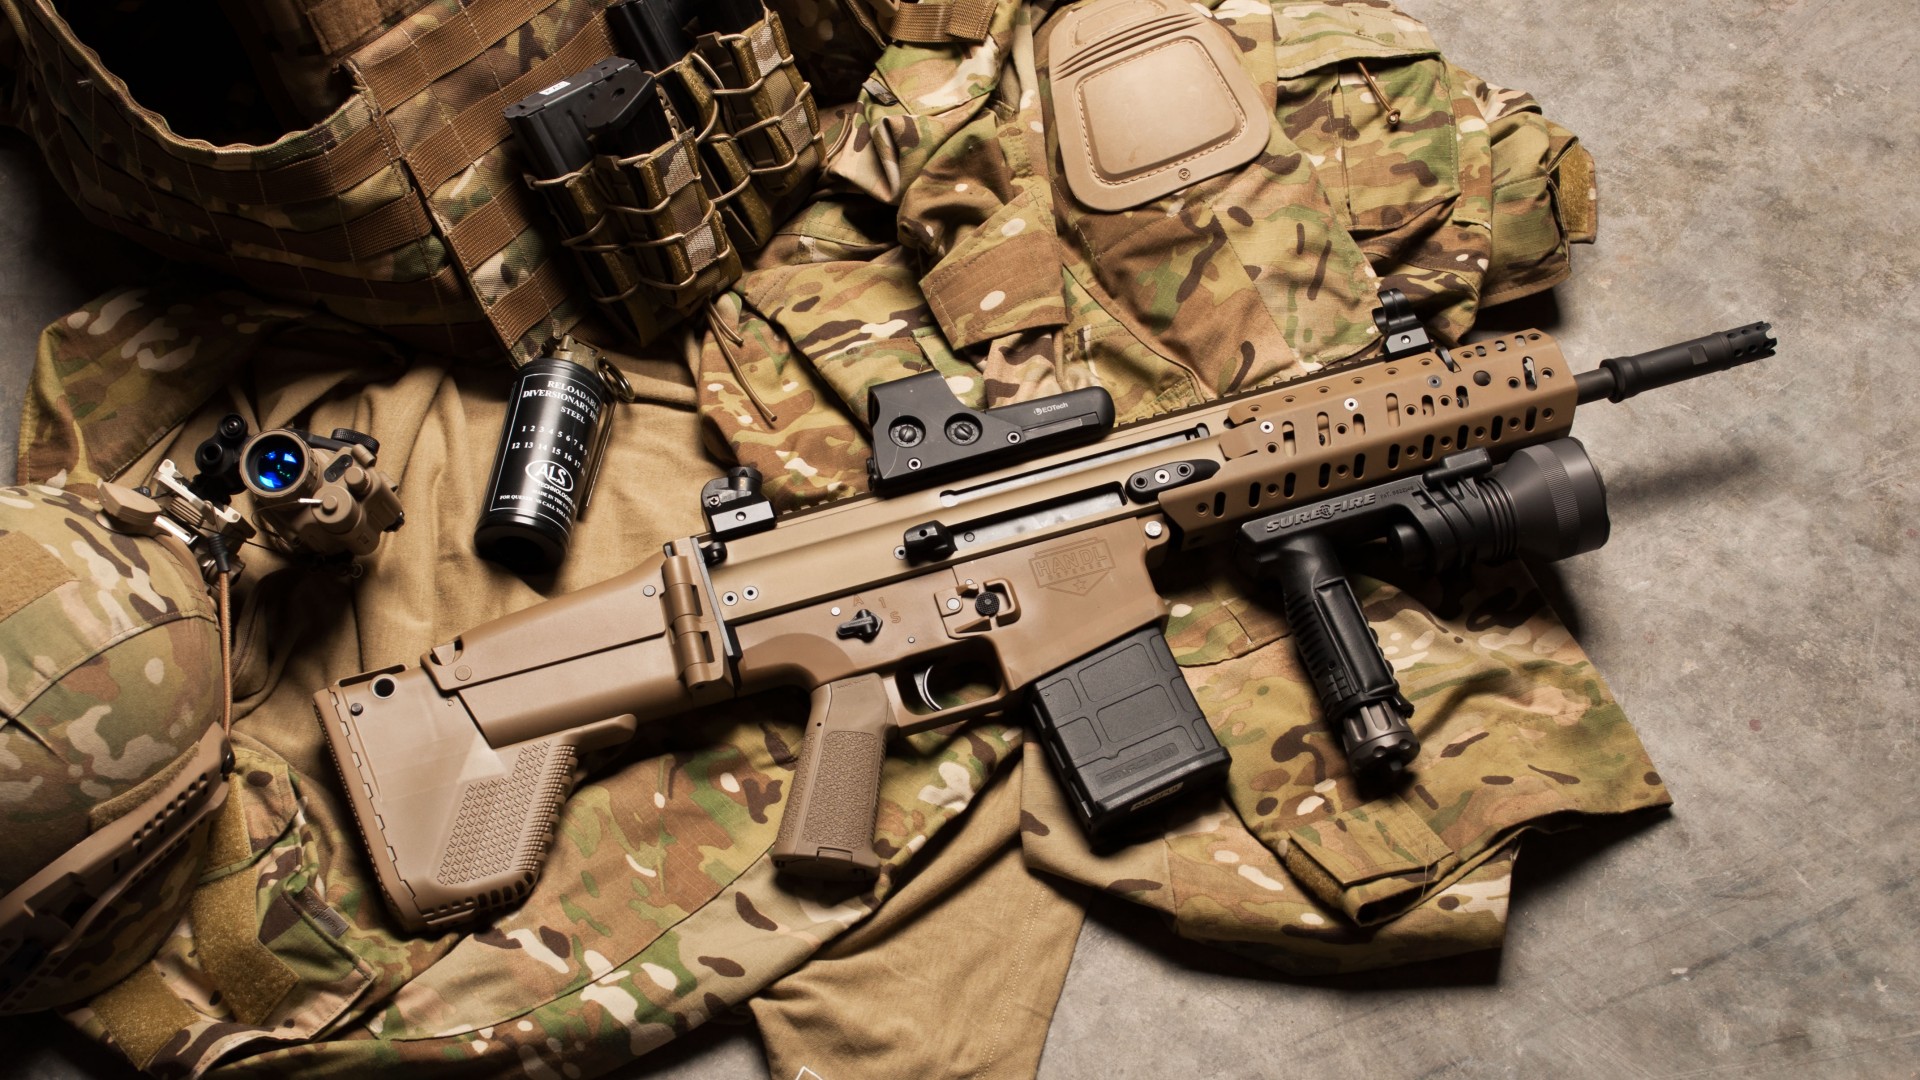 FN SCAR, штурмовая винтовка, аммуниция, униформа, FN SCAR, assault rifle, modular rifle, FN Herstal, hand grenade, military, ammunition, uniform (horizontal)